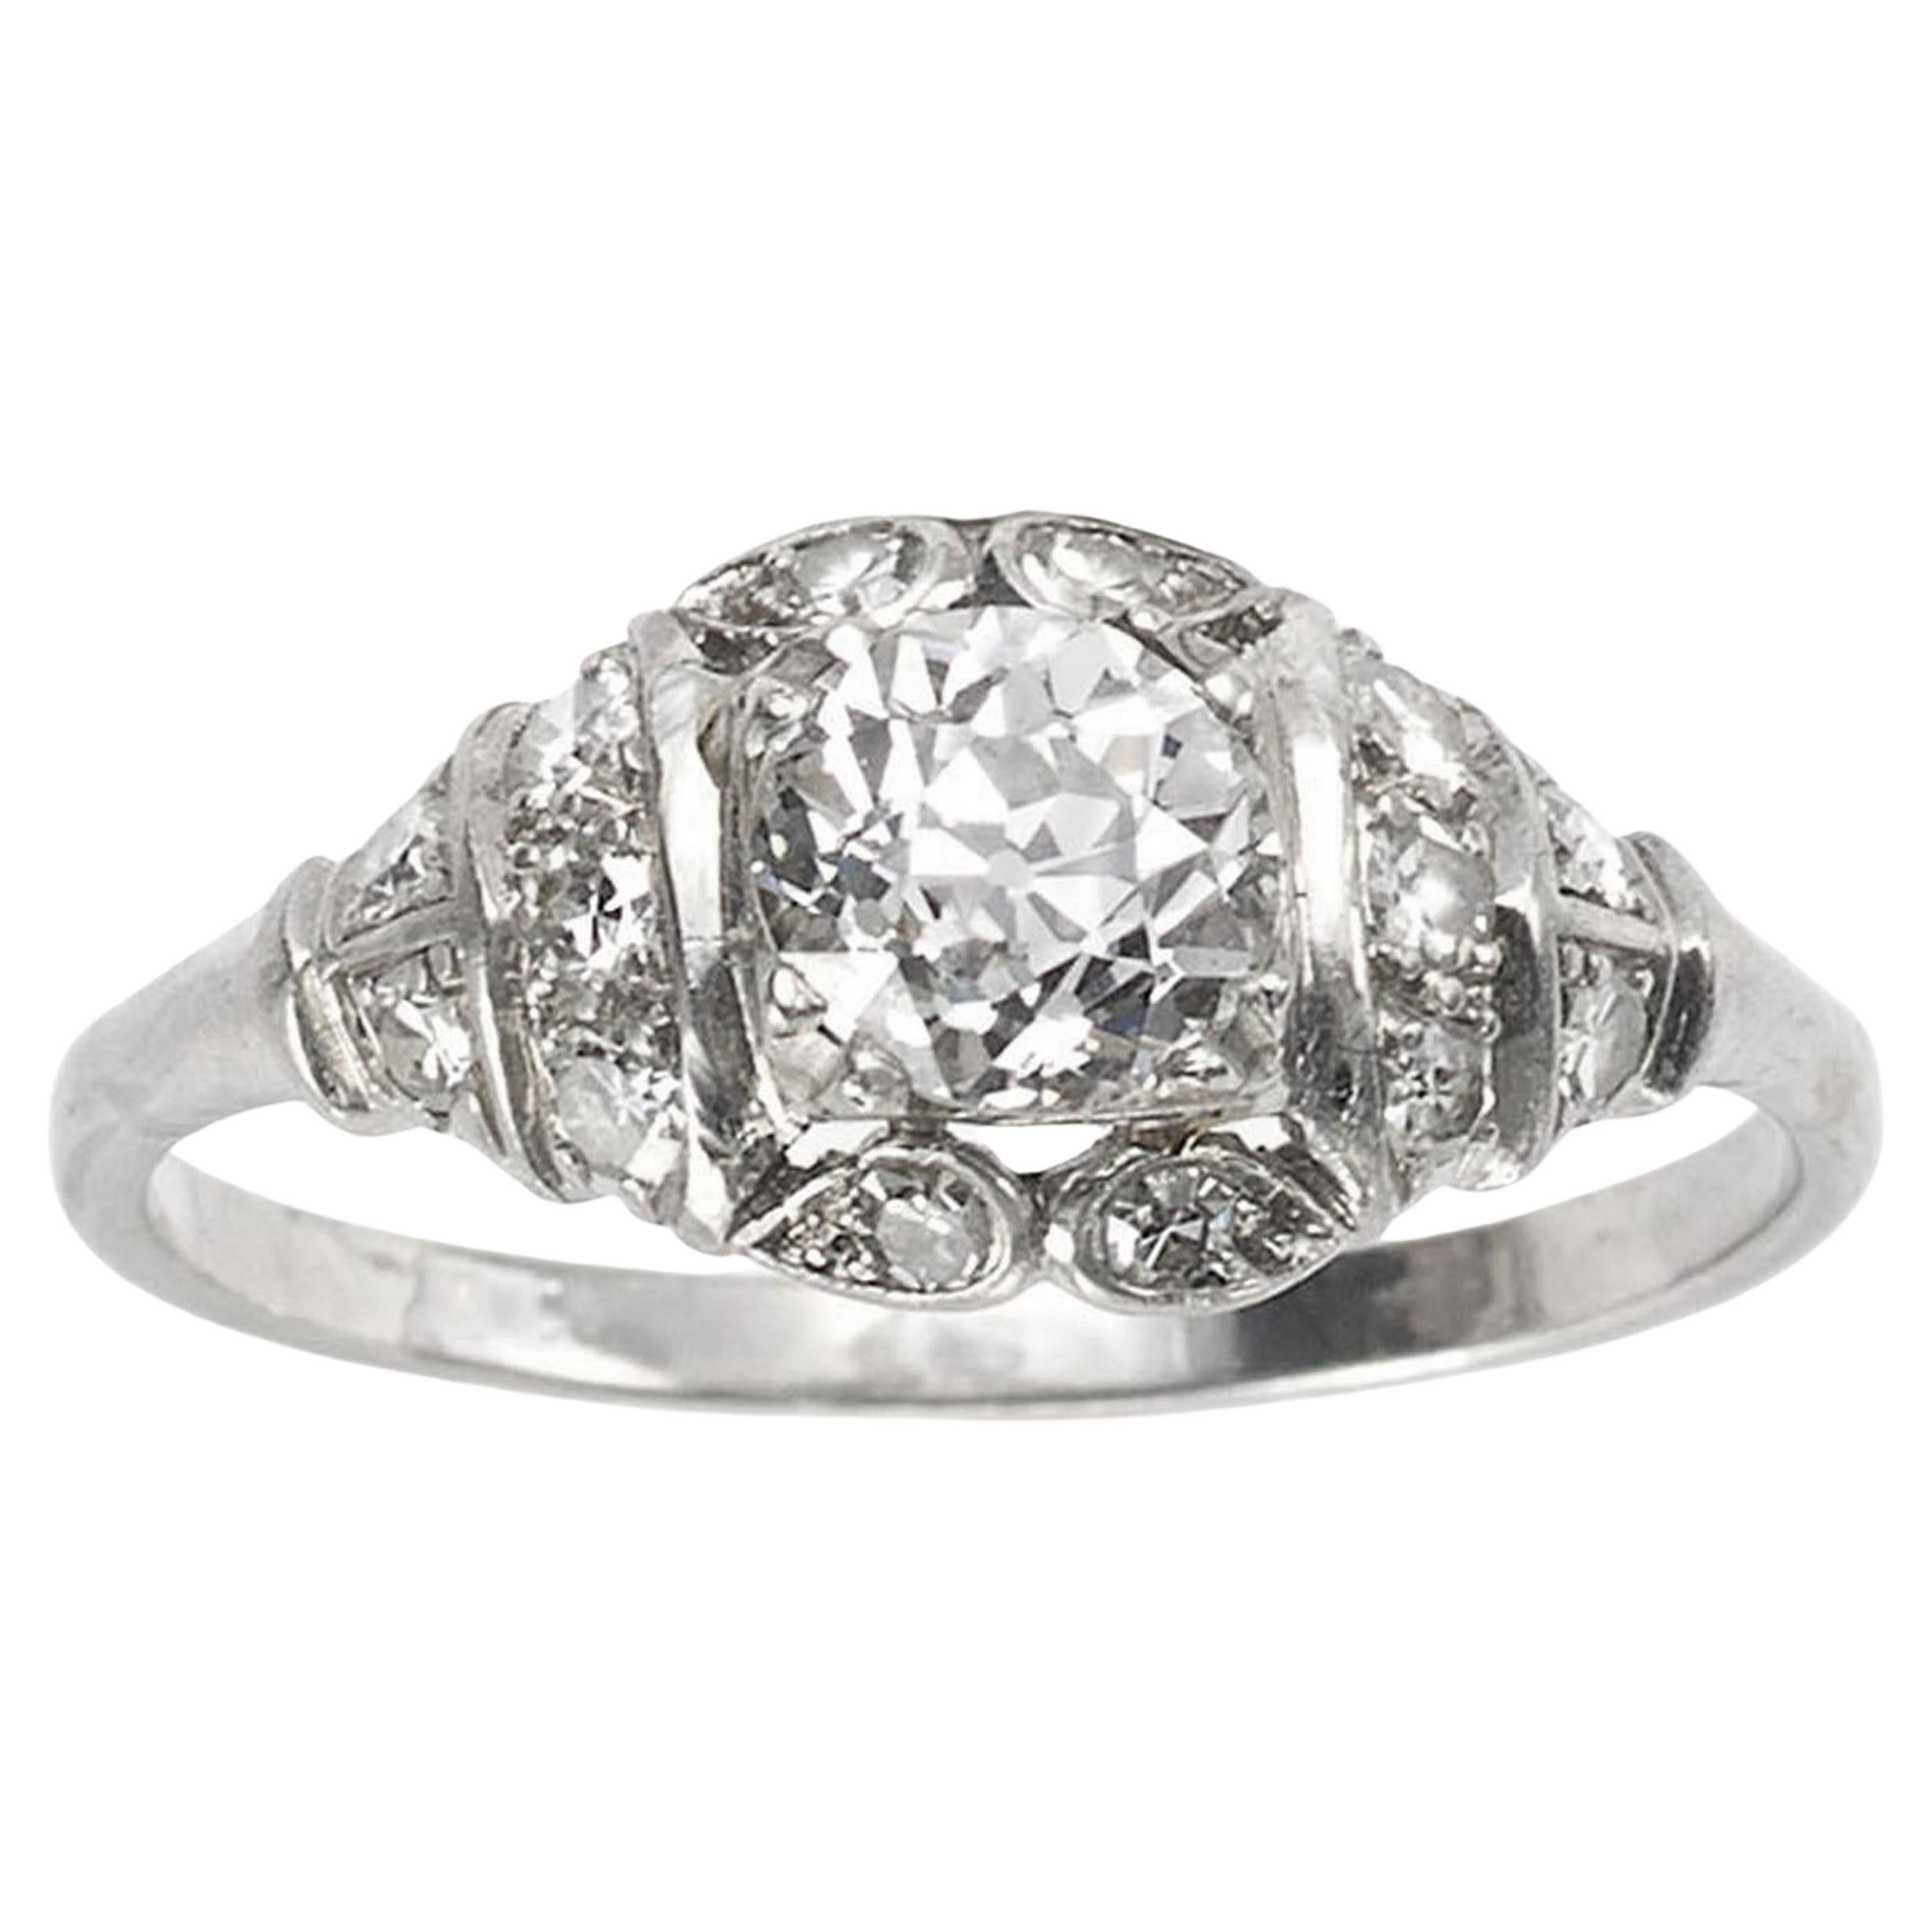 Late Art Deco Diamond and Platinum Ring, 0.85 Carats H SI1, circa 1940